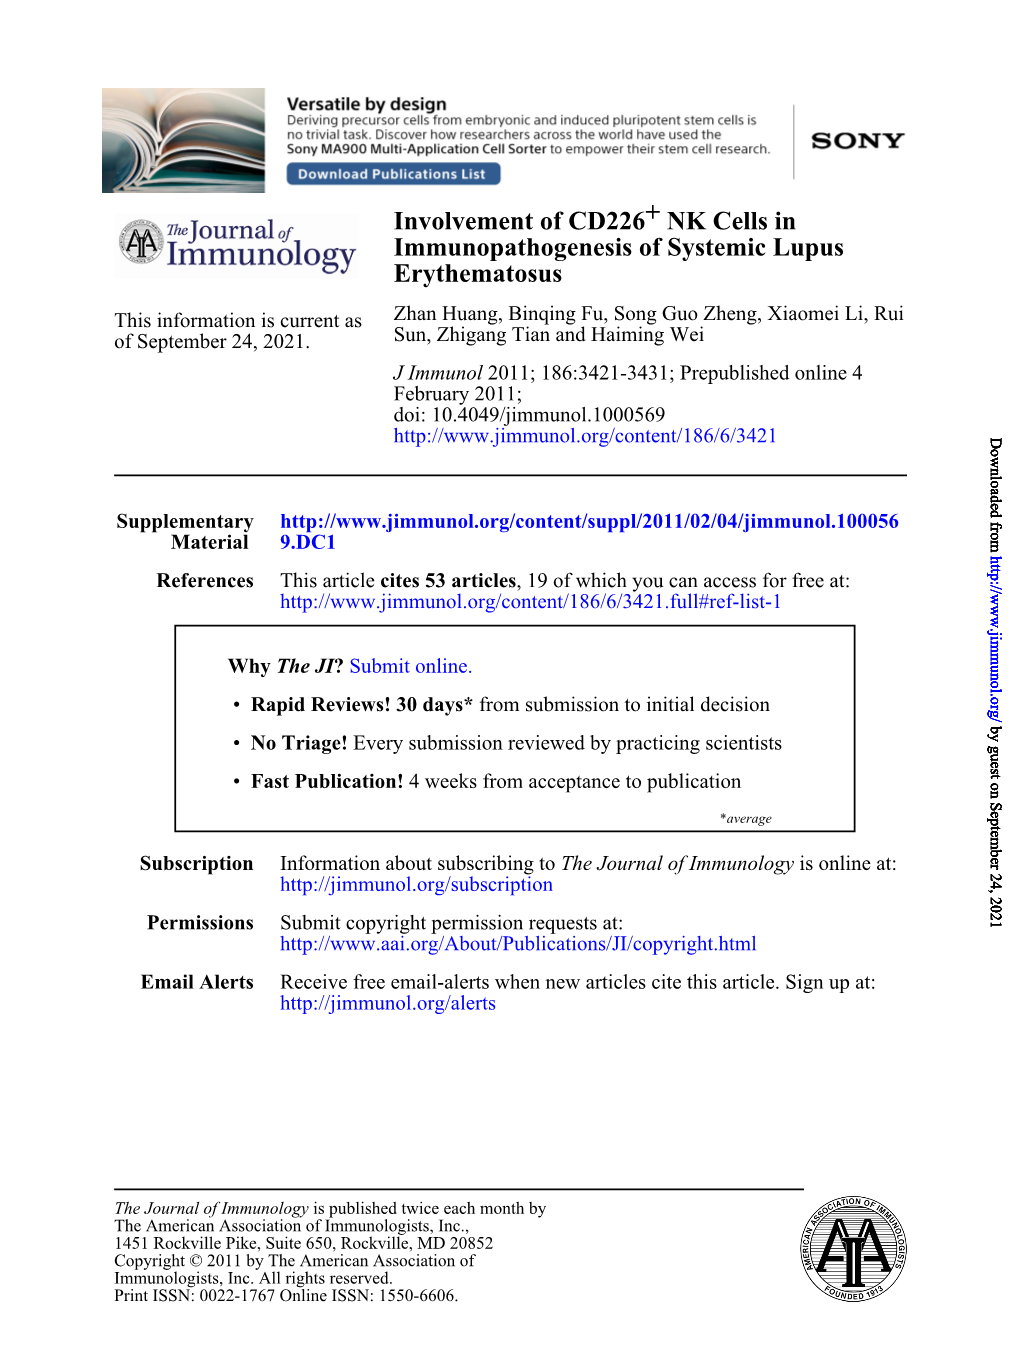 Erythematosus Immunopathogenesis of Systemic Lupus NK Cells in + Involvement of CD226